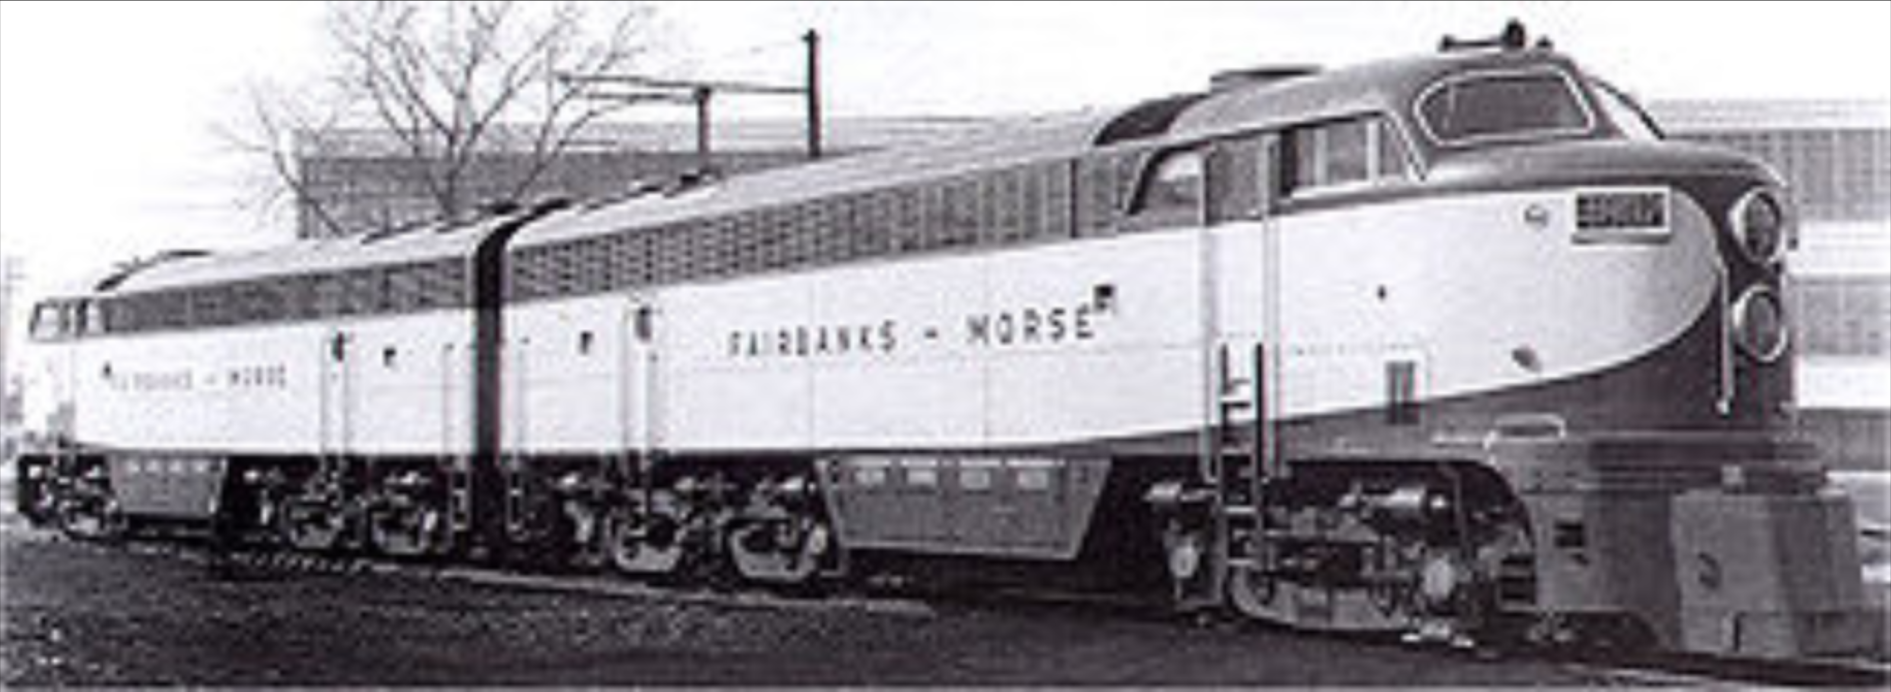 Fairbanks Morse, C Liner, Entertainment Trains Wiki